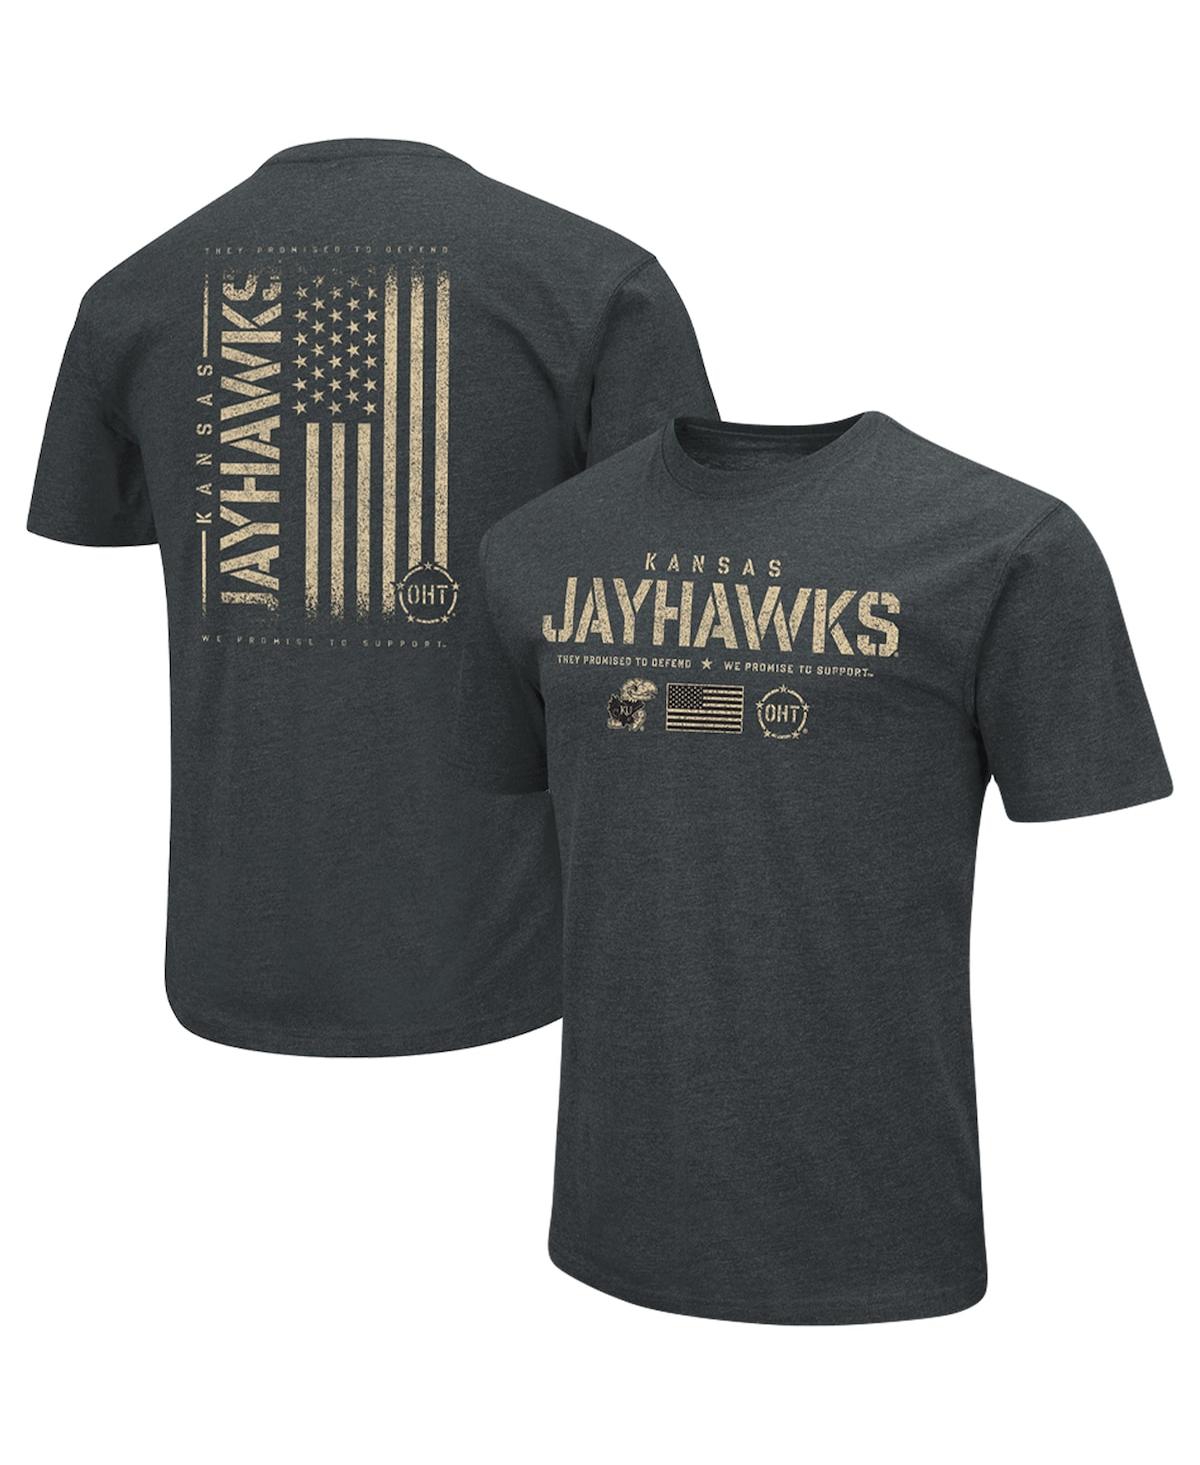 Men's Colosseum Heathered Black Kansas Jayhawks Oht Military-Inspired Appreciation Flag 2.0 T-shirt - Heathered Black